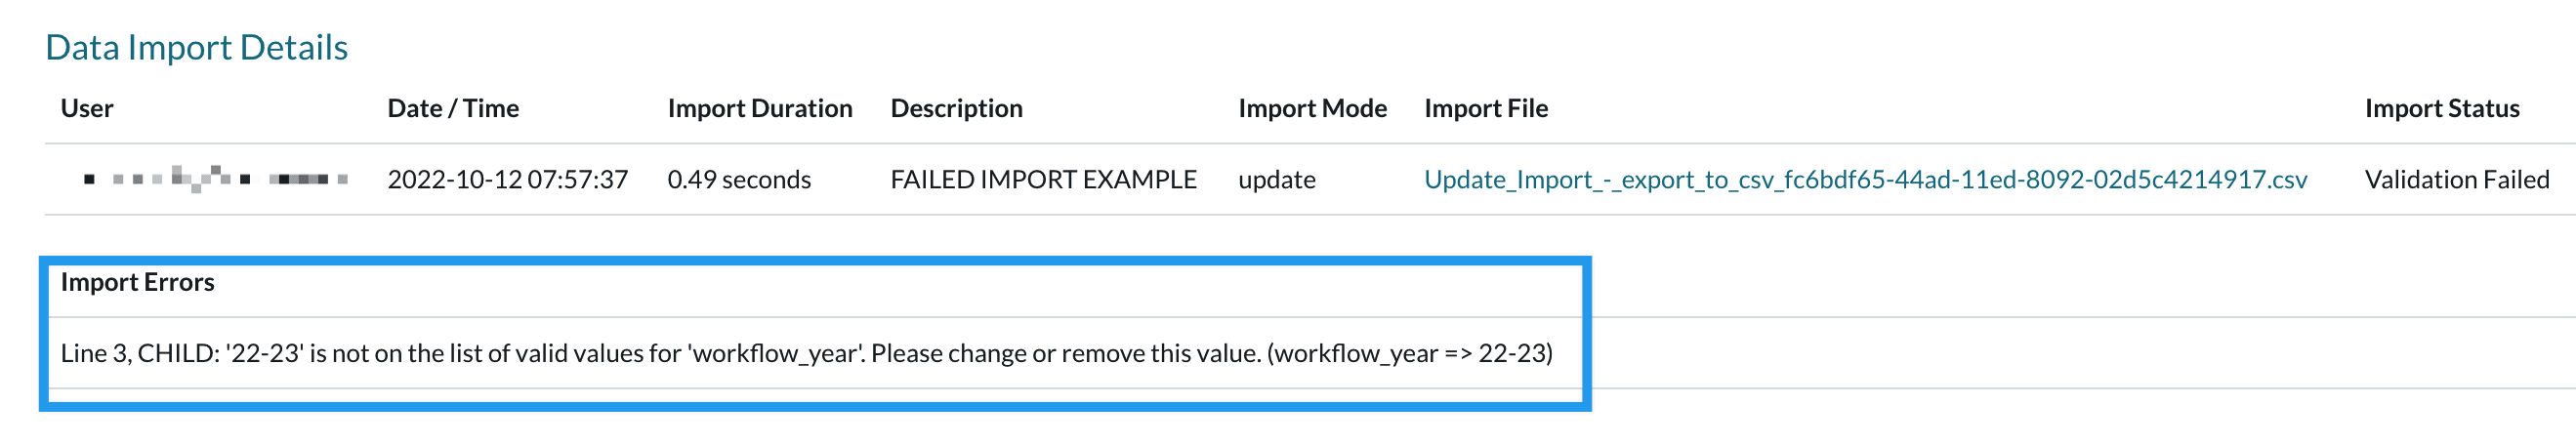 image highlighting import error